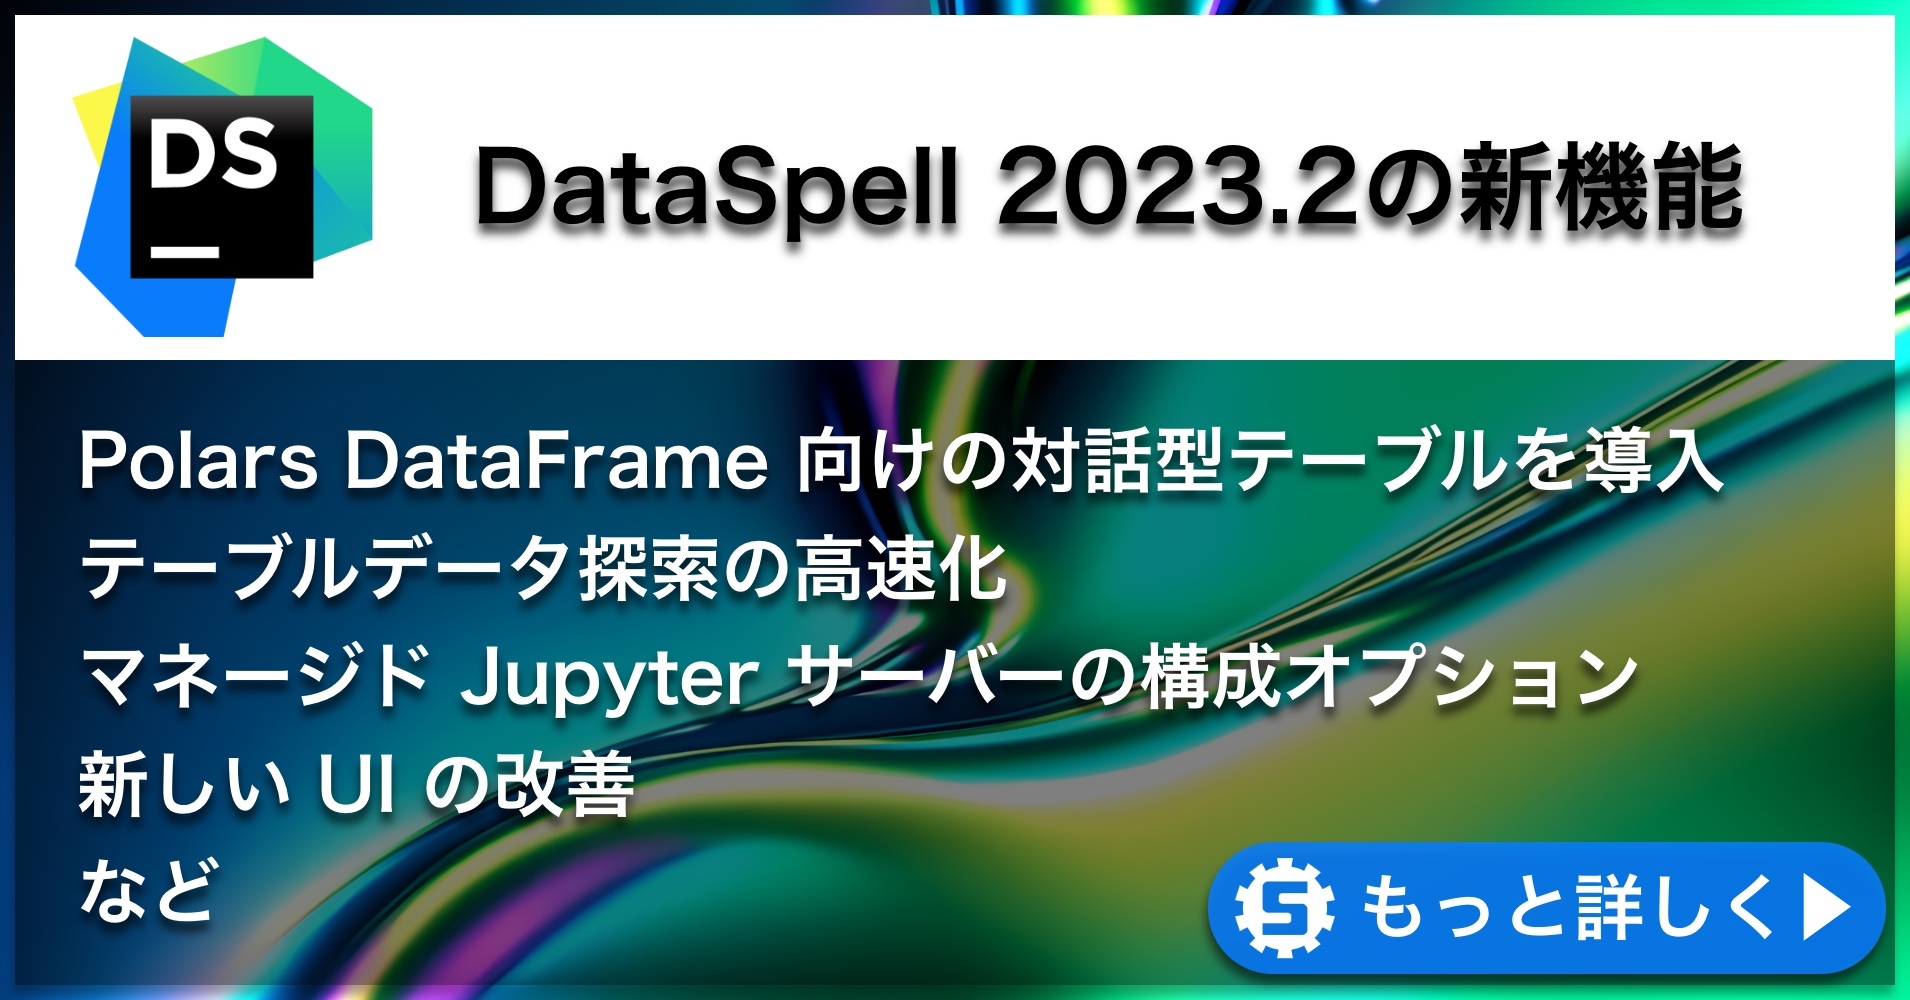 DataSpell 2023.2の新機能